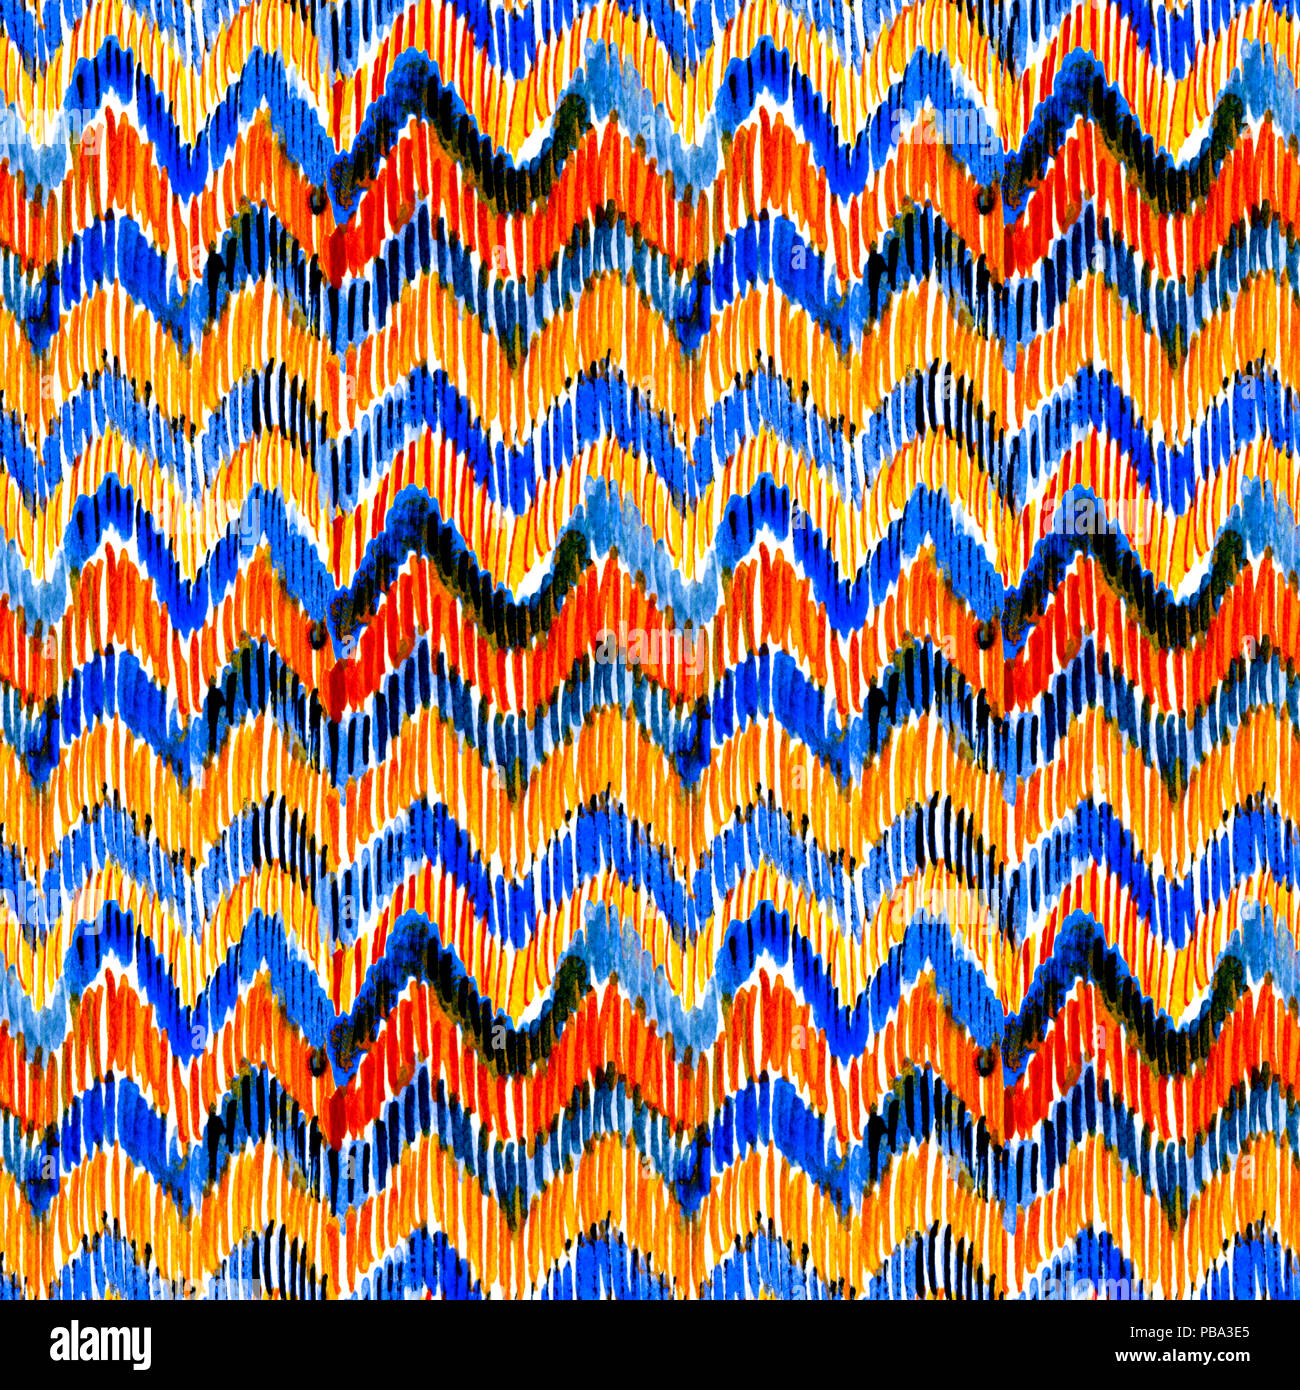 Aquarell orange und blau Ikat lebendige nahtlose Muster. Trendy Tribal Muster in Aquarell Stil. Pfauenfeder für Gewebe, Textilien, Keramik Stockfoto